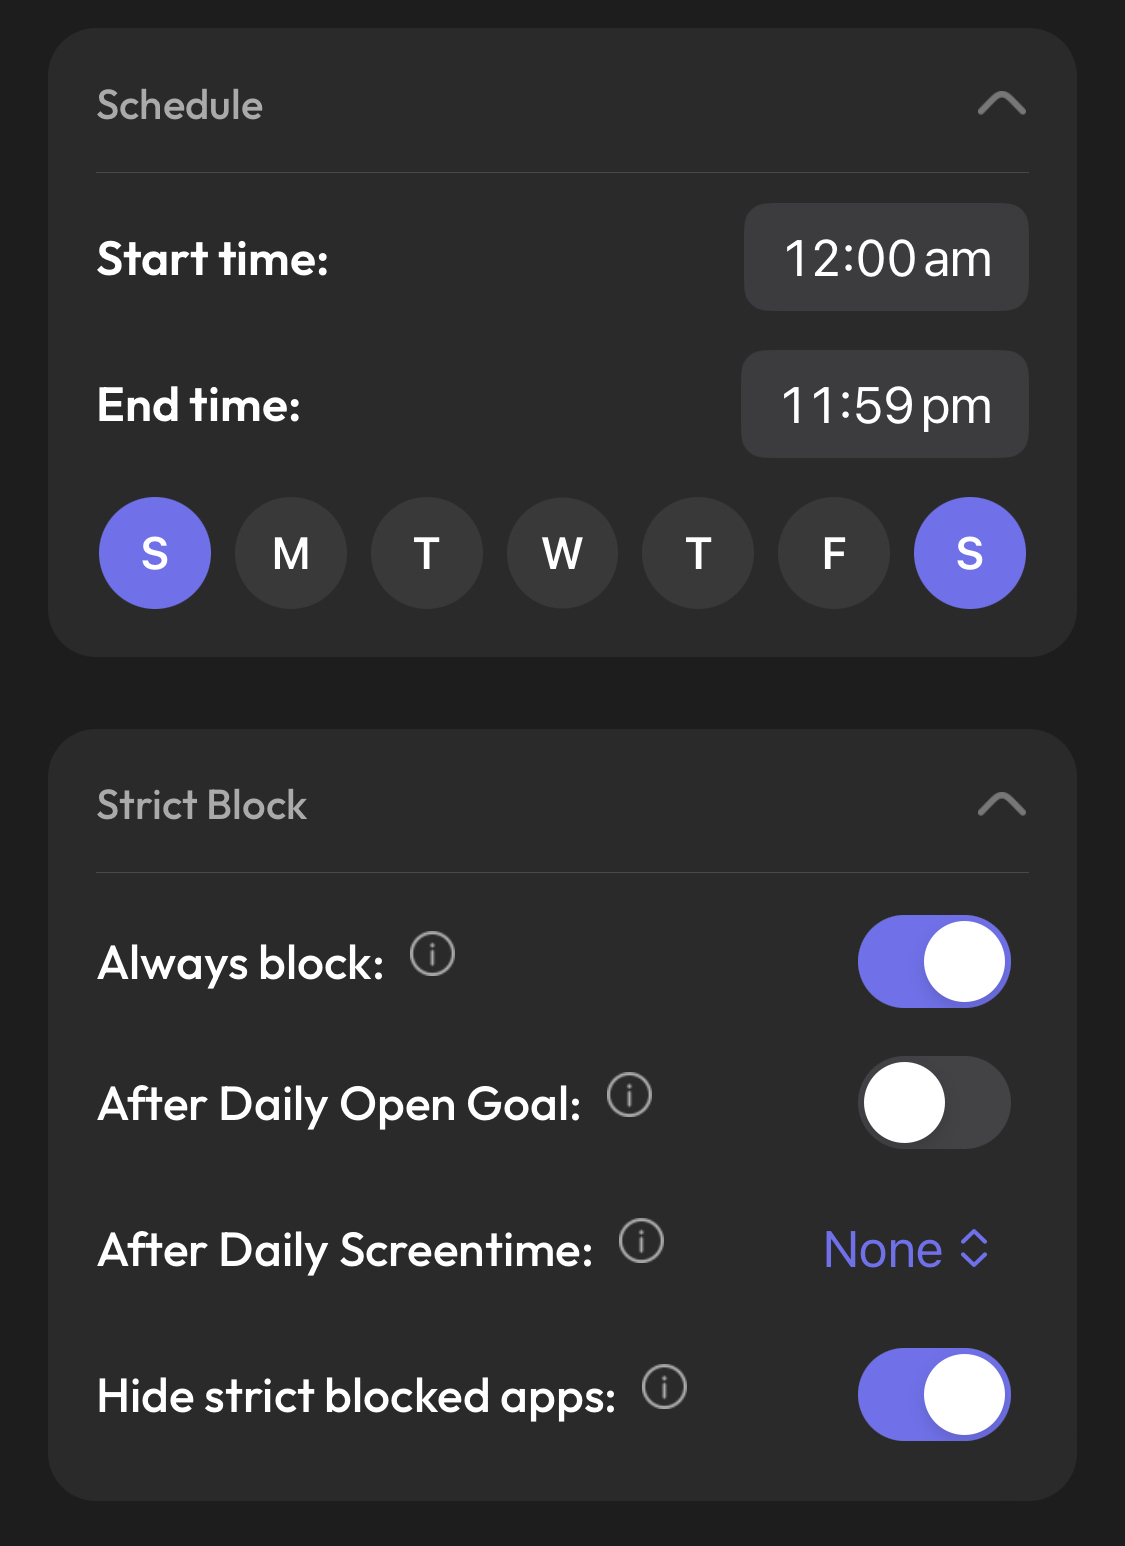 More advanced settings via the ScreenZen app